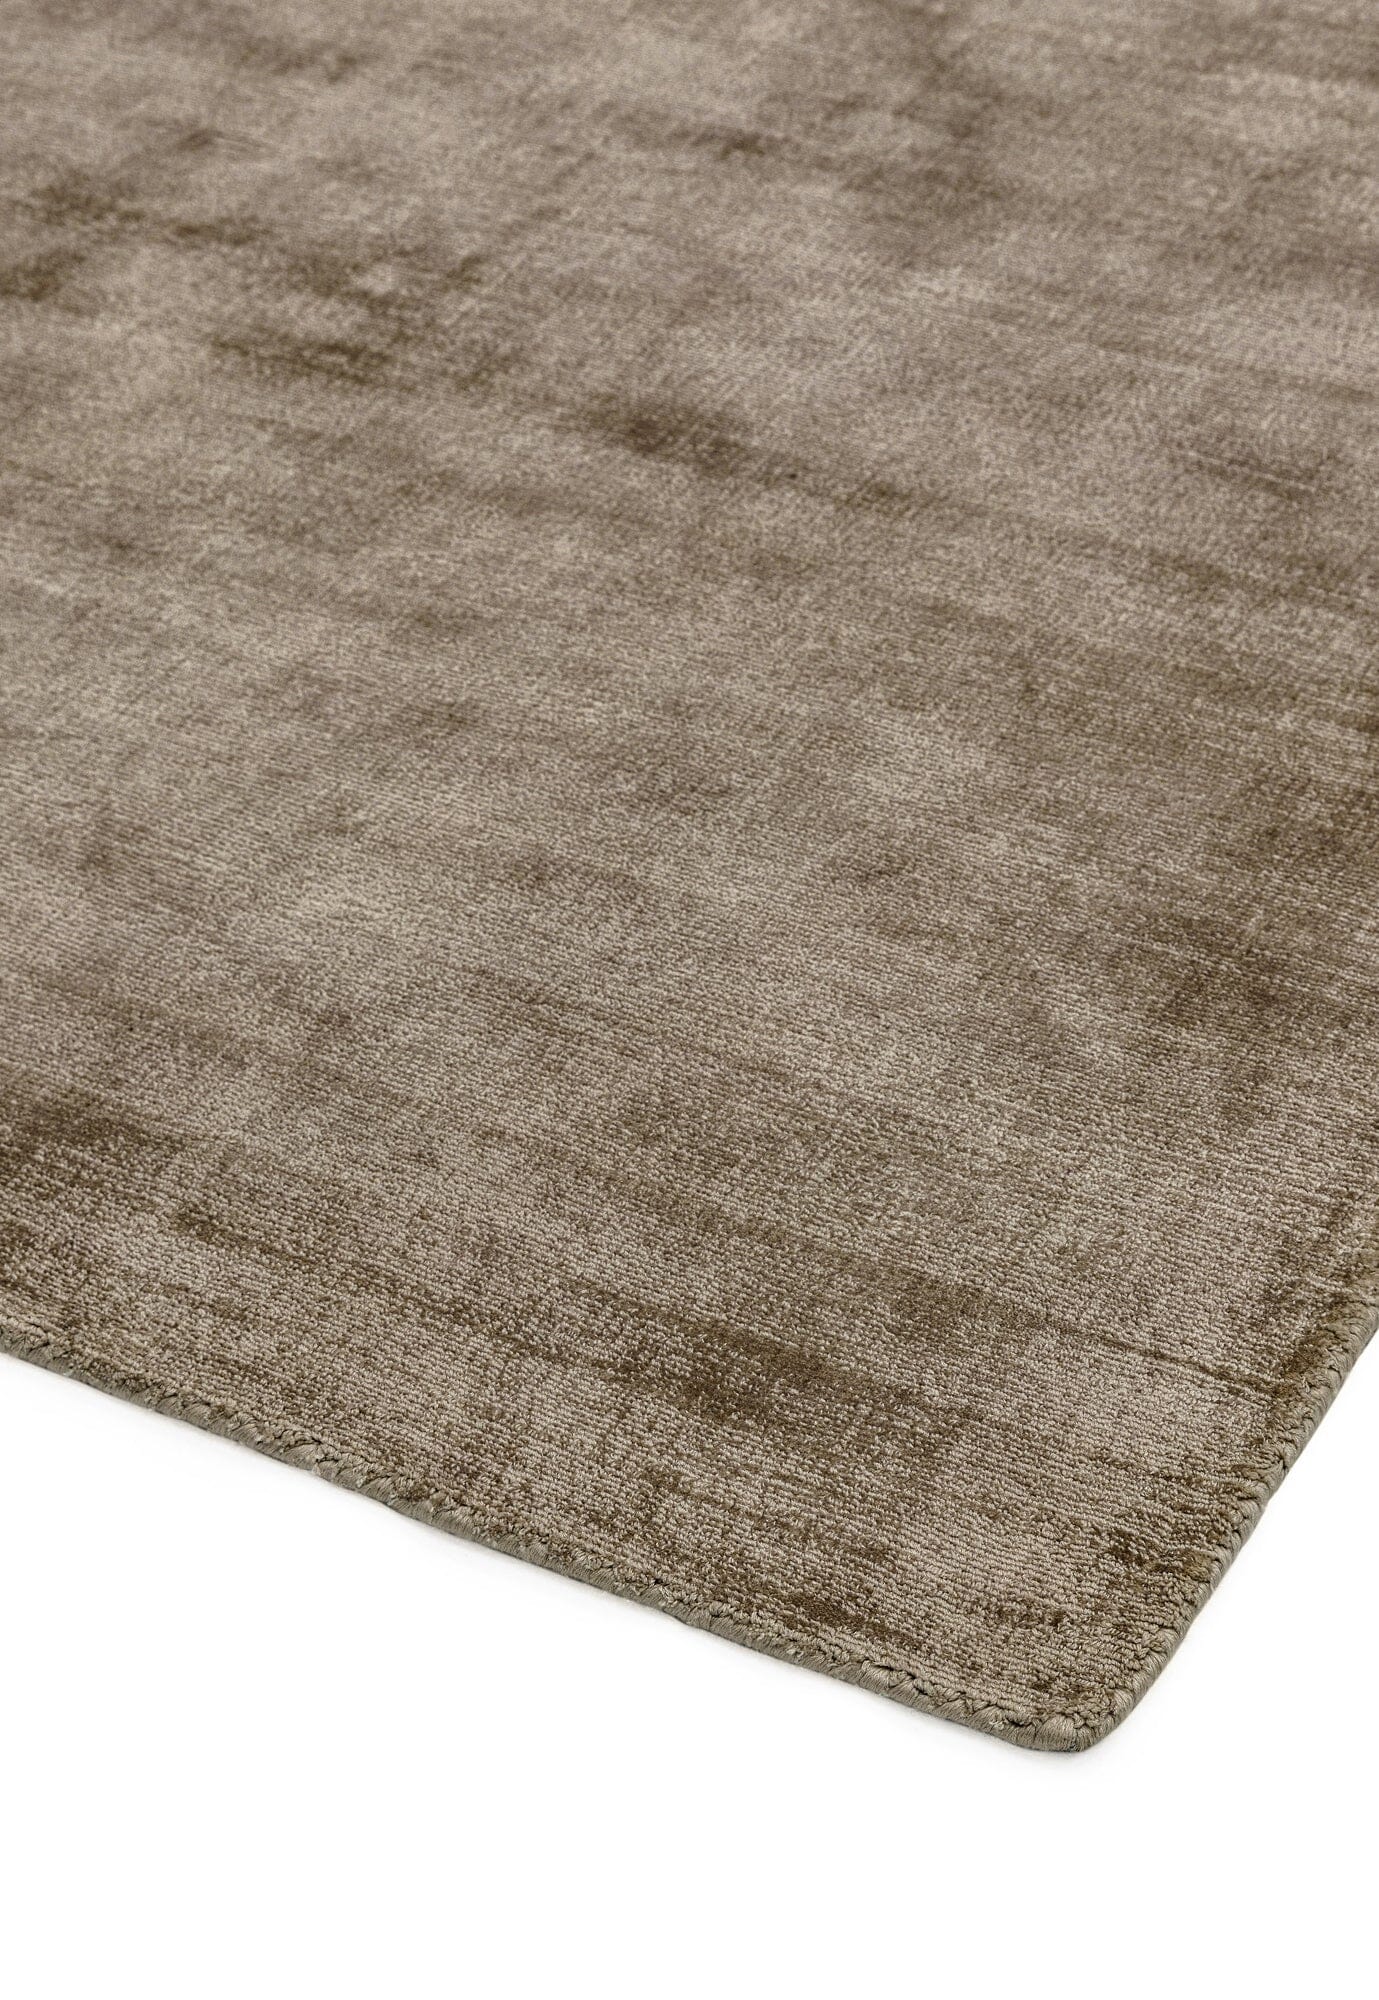 Asiatic Carpets Blade Hand Woven Rug Mocha - 120 x 170cm